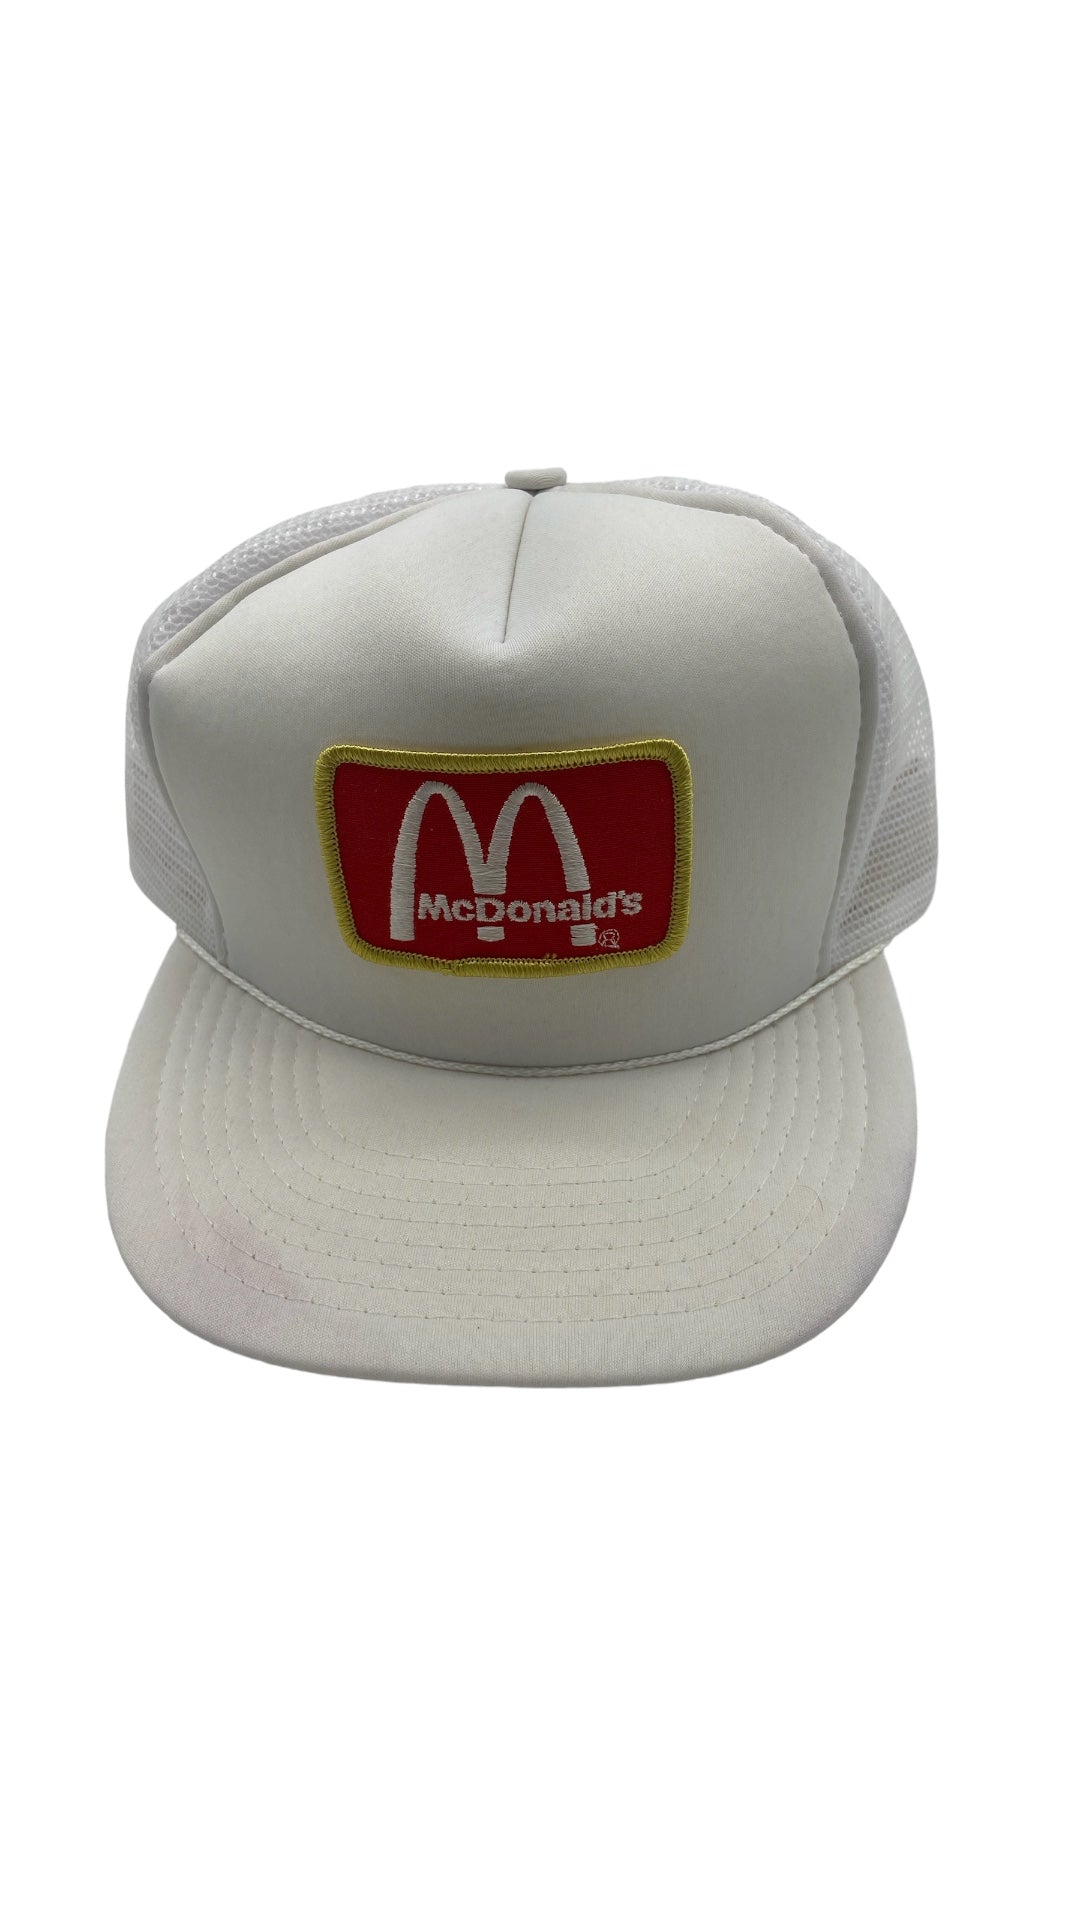 VTG Mcdonald's Patch Trucker Hat